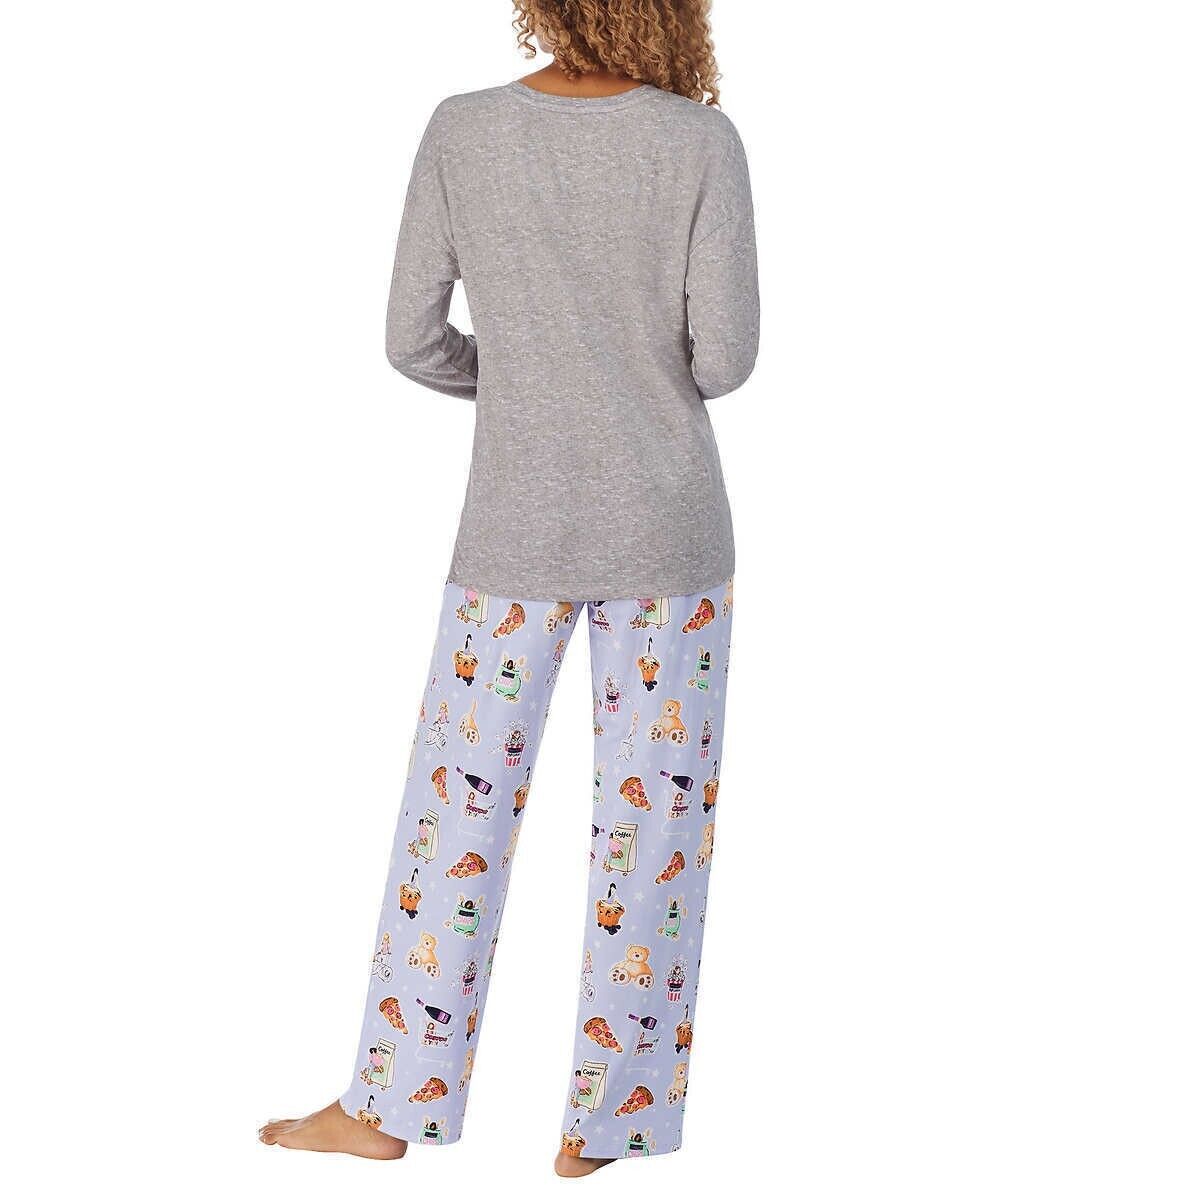 Costco Buys - Pajama sets by @janeandbleecker! 😍 How cute